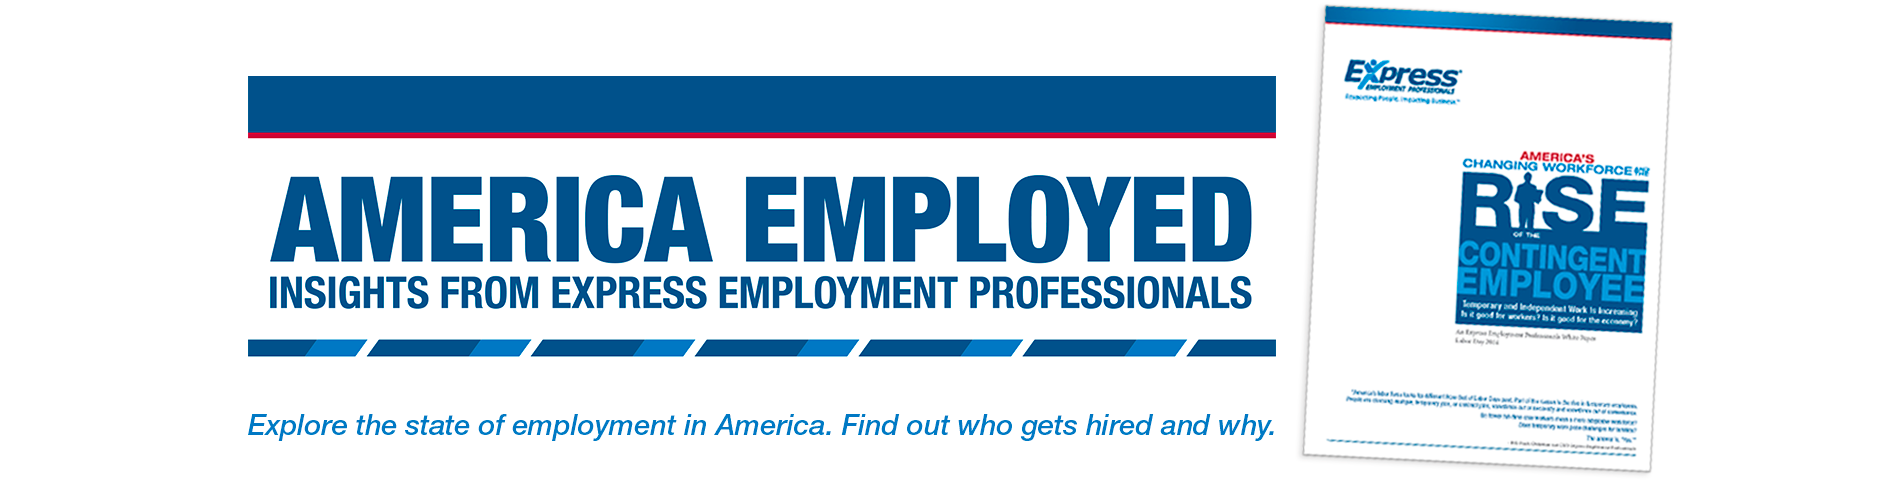 Express-Employment-Professionals-Ft-Worth-Texas-Jobs